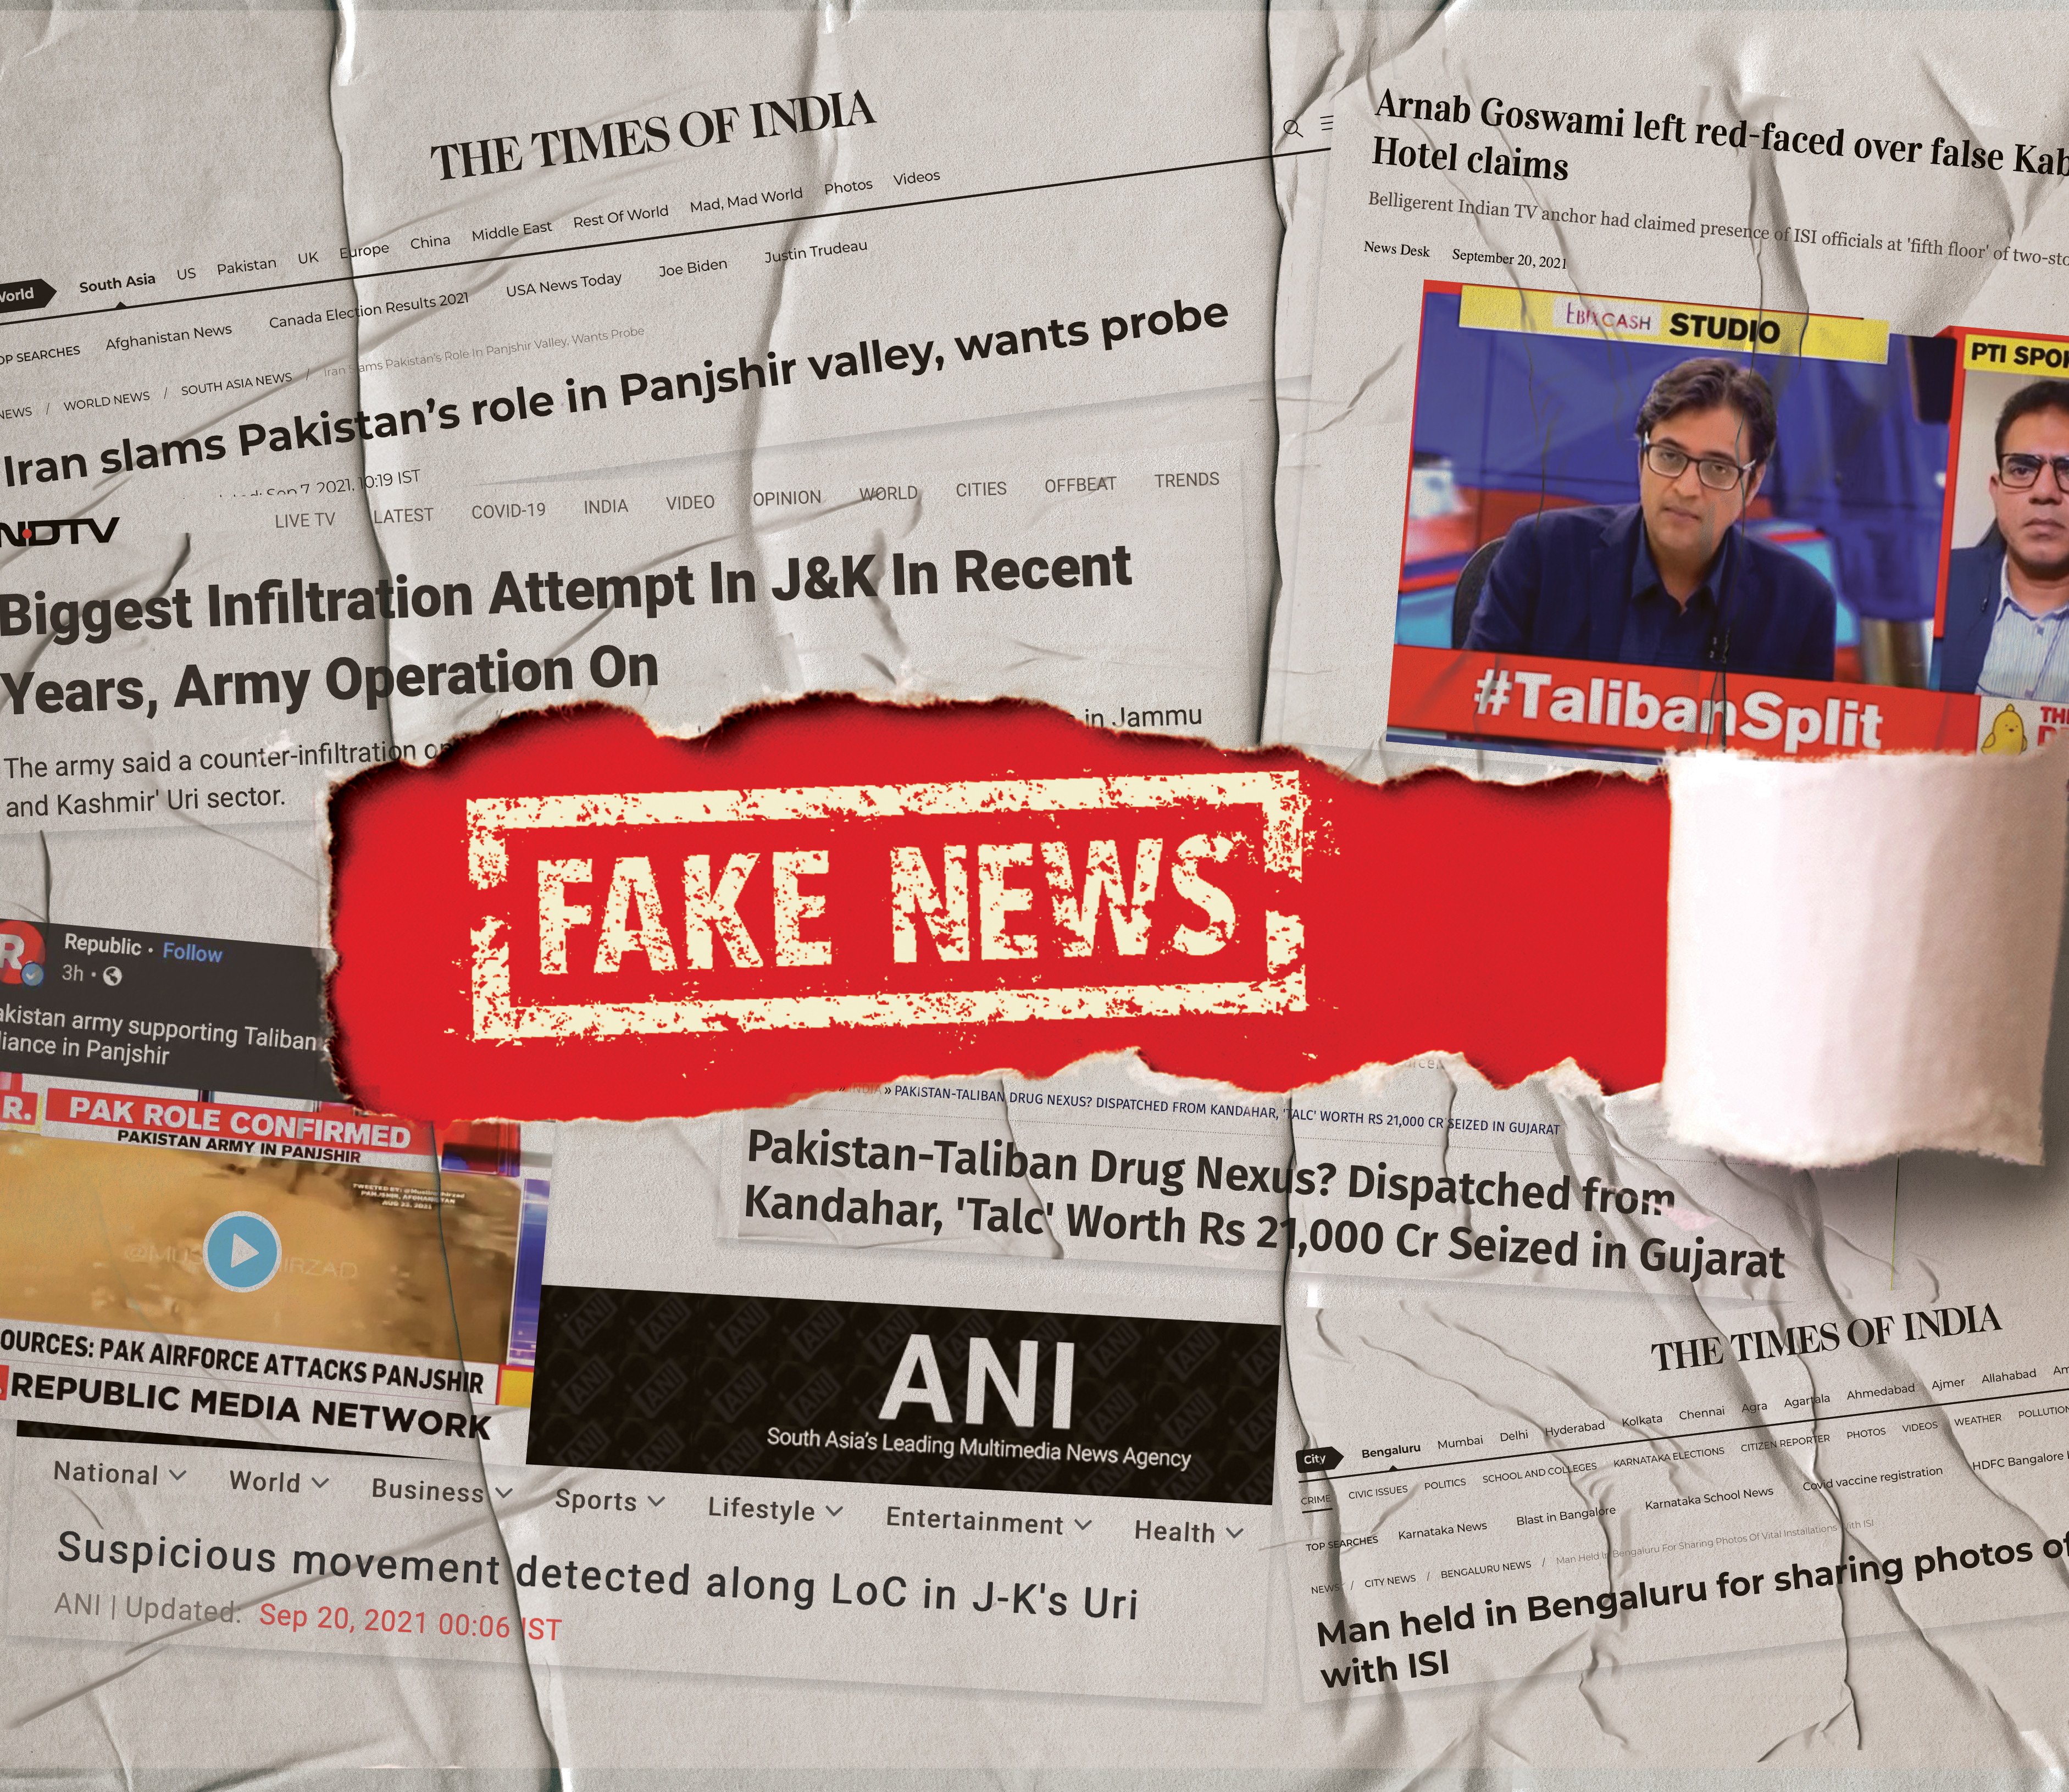 Indian news agency continues pushing fake narratives against Pakistan, China